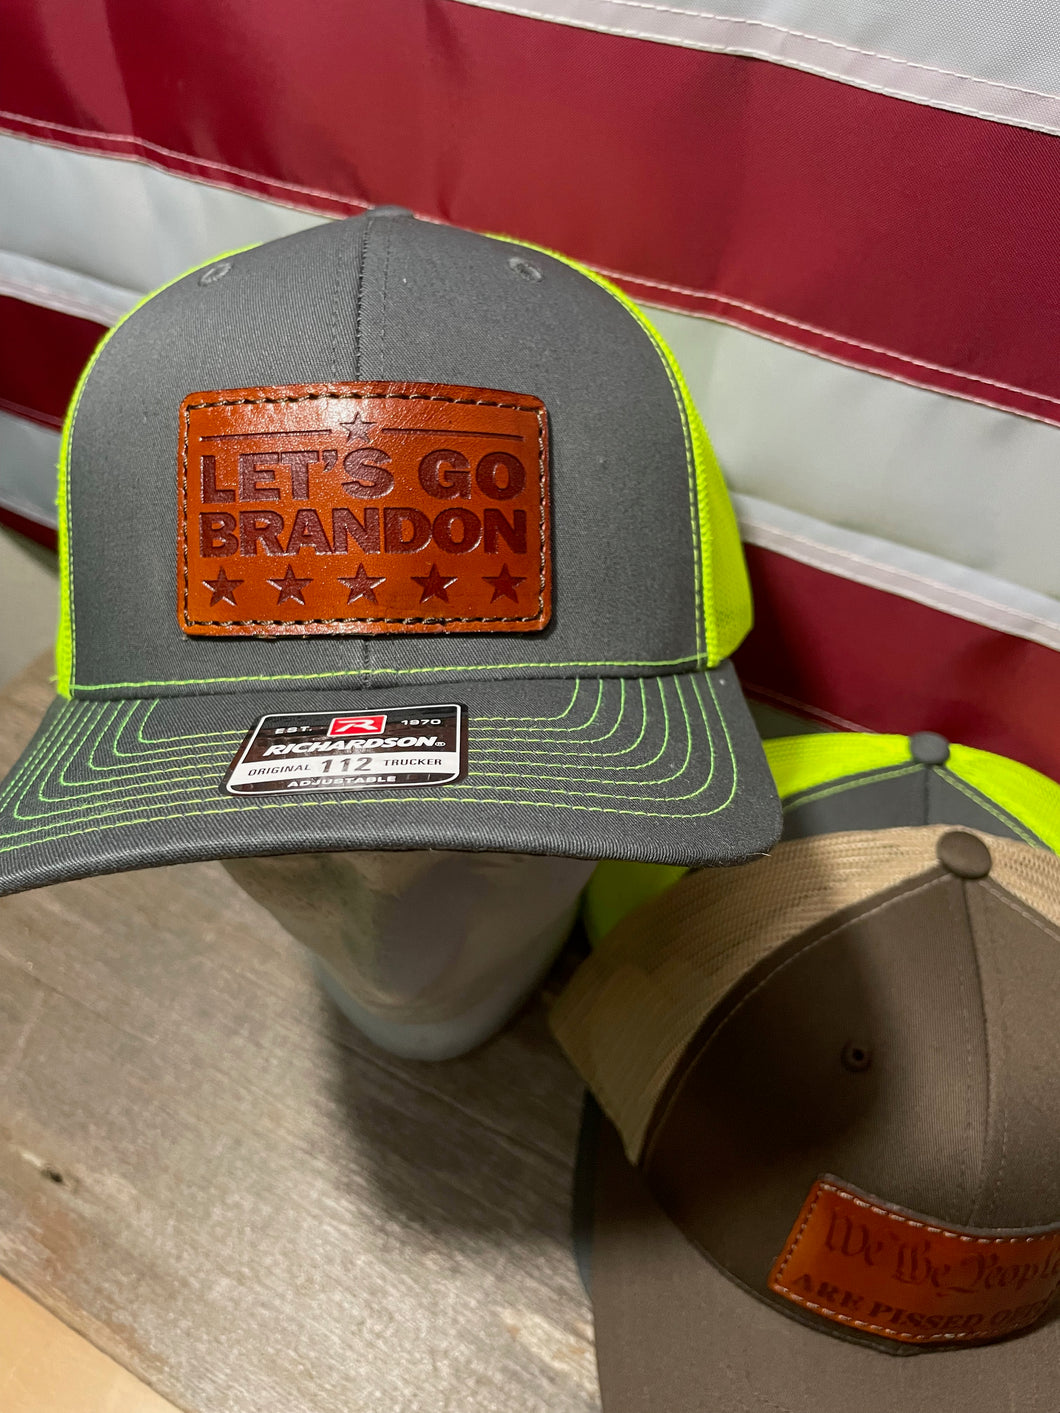 Let's Go Brandon Trucker Hats